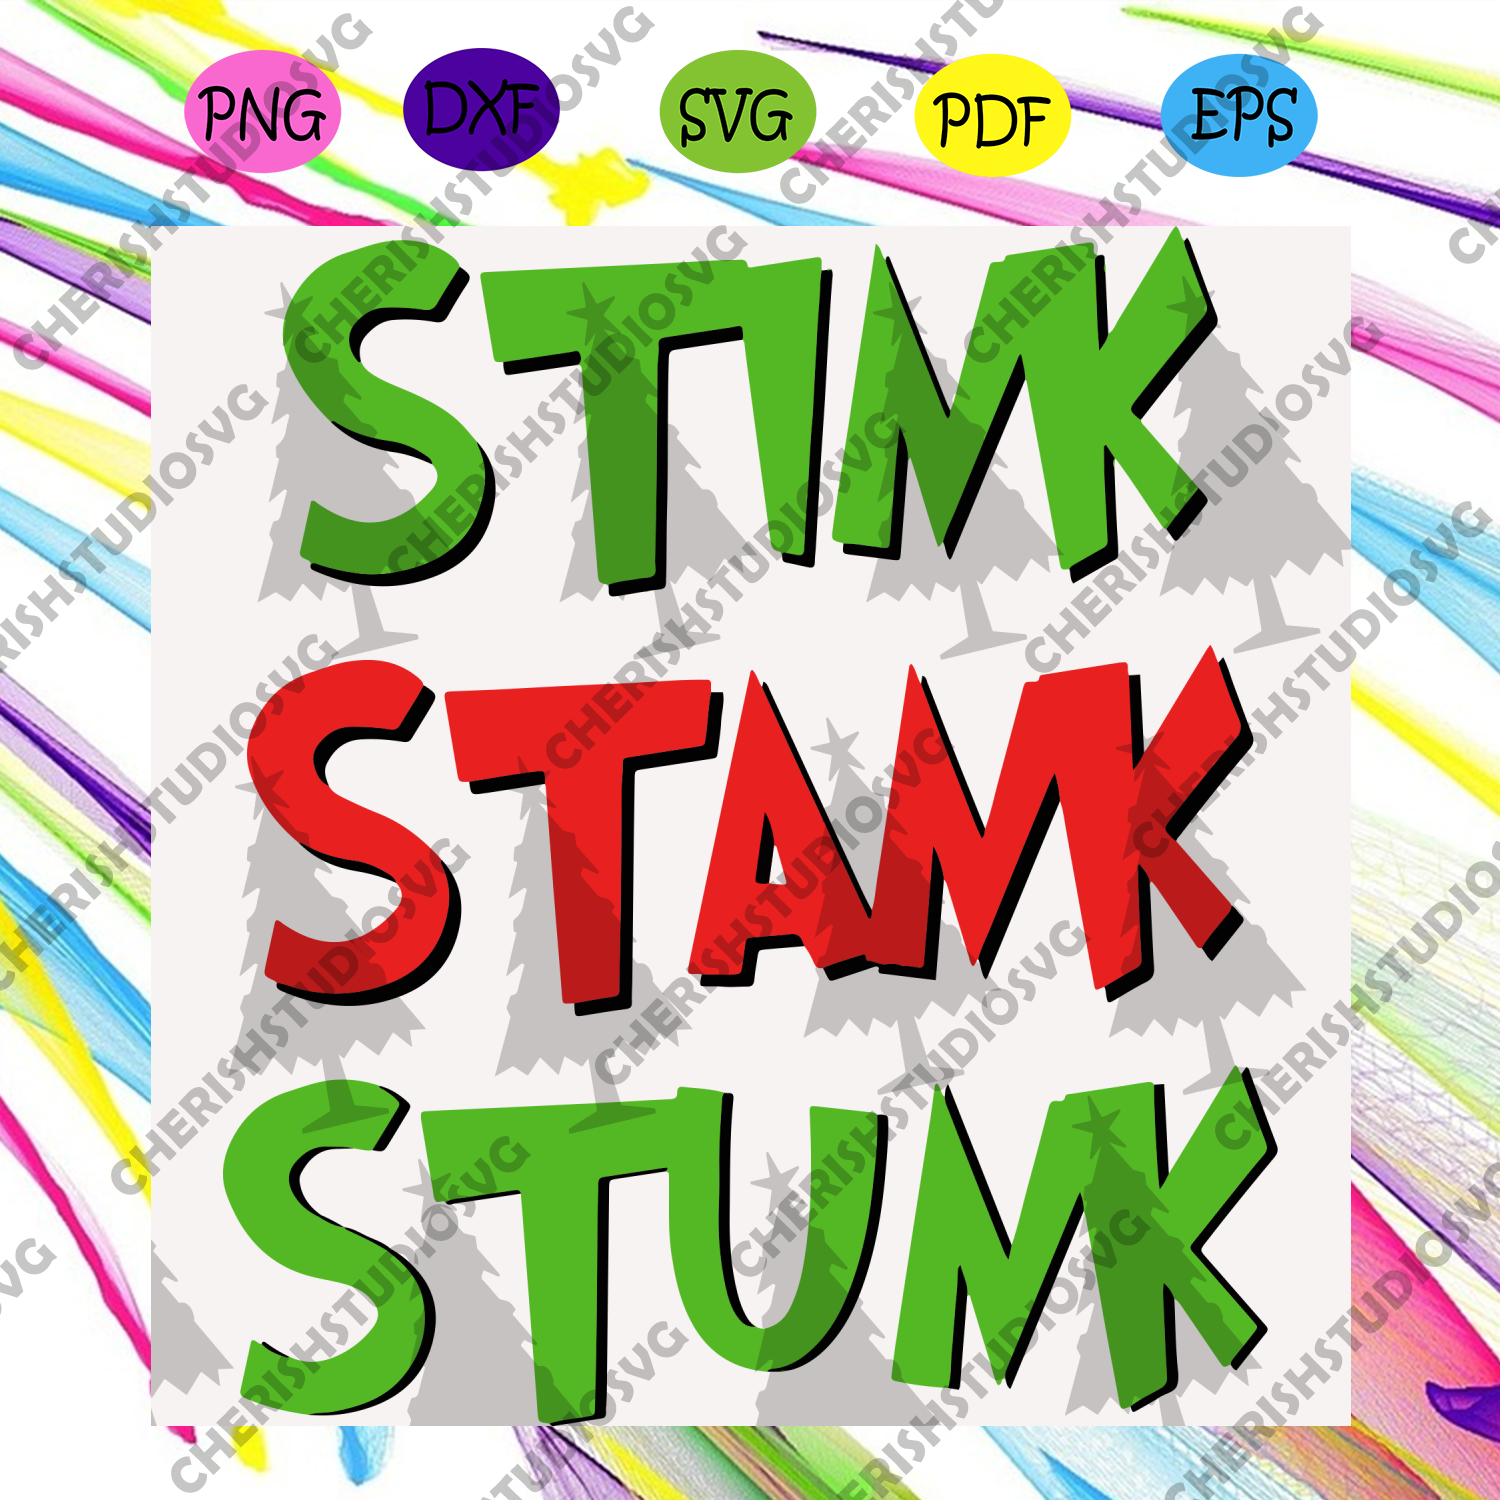 Download Stink Stank Stunk Svg Christmas Svg Grinch Svg Funny Grinch Svg Gr Cherishsvgstudio